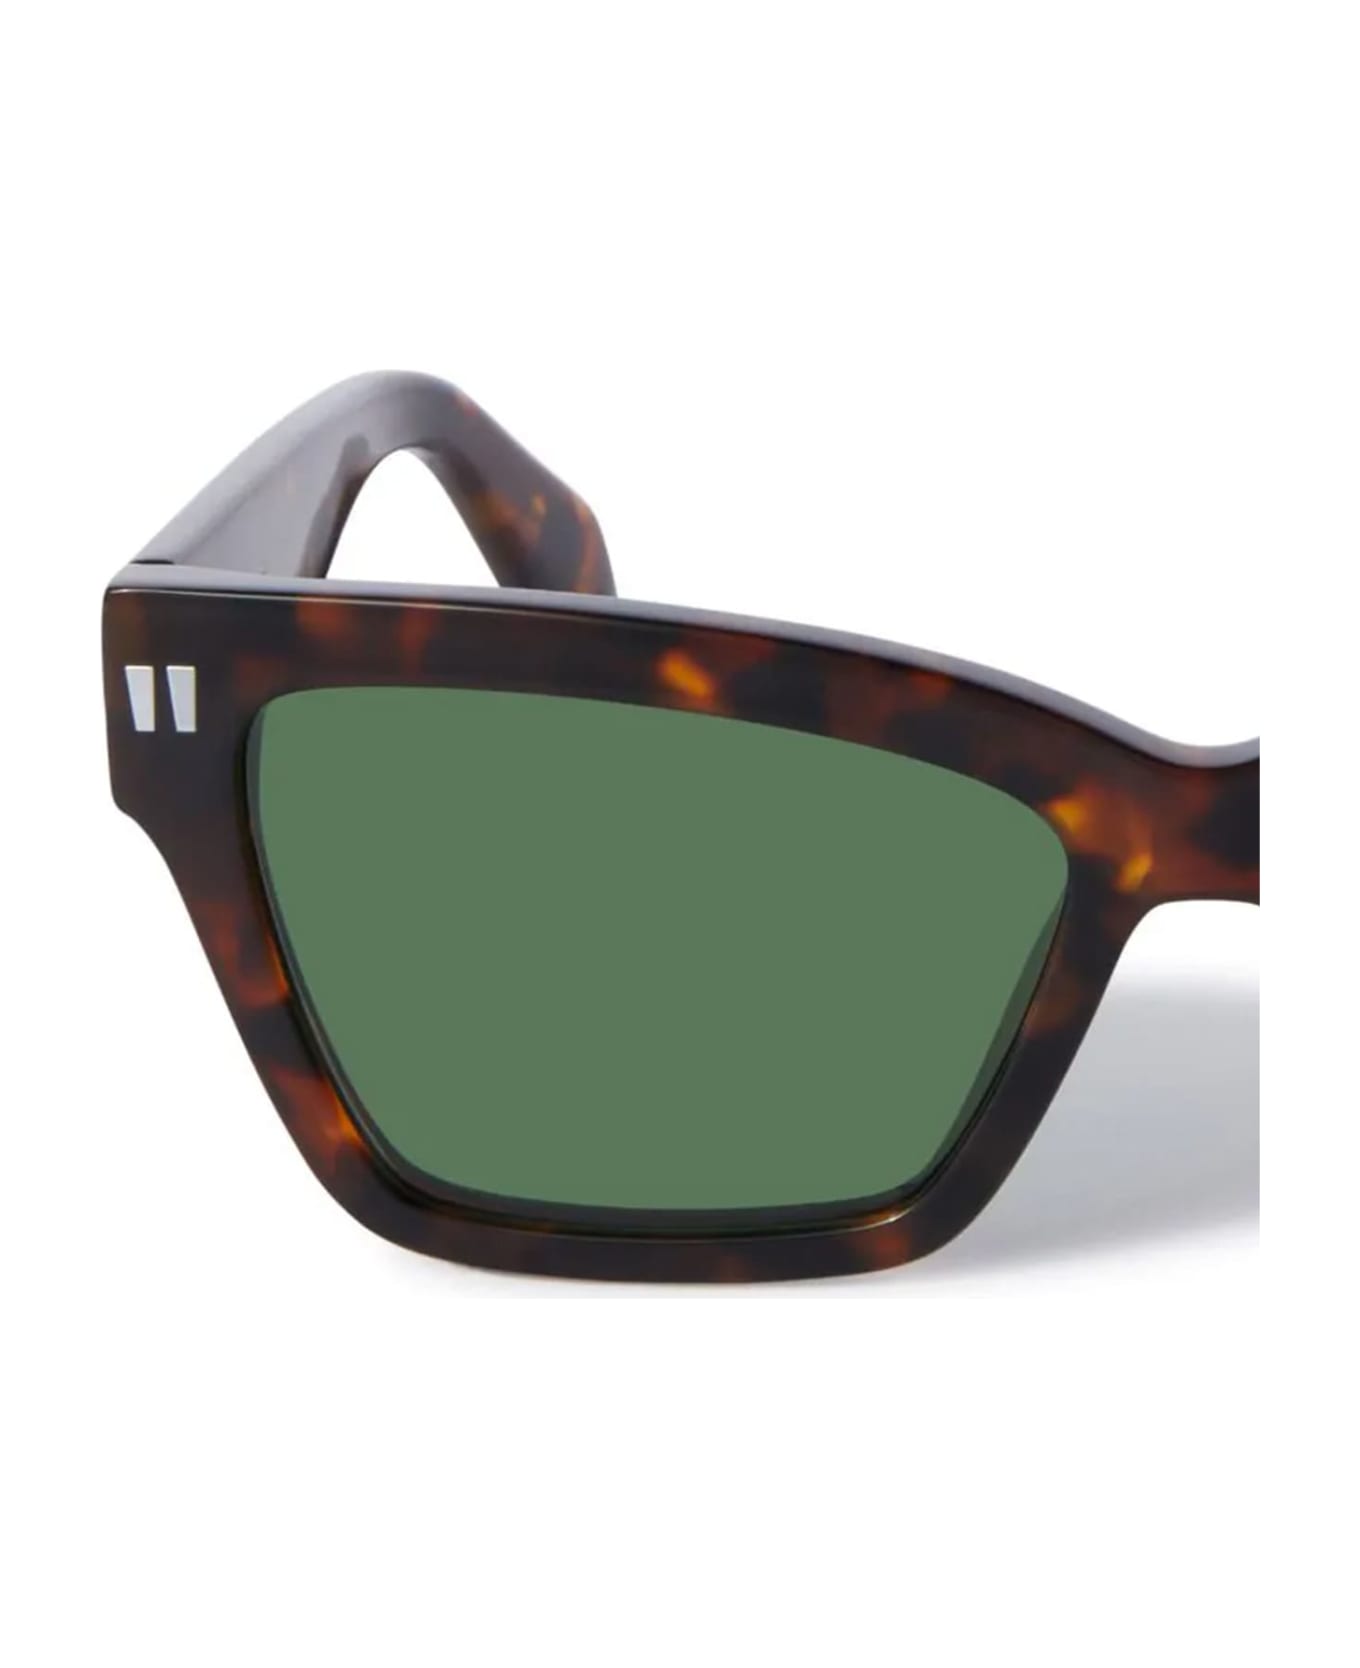 Off-White Cincinnati - Havana / Green Sunglasses - Havana